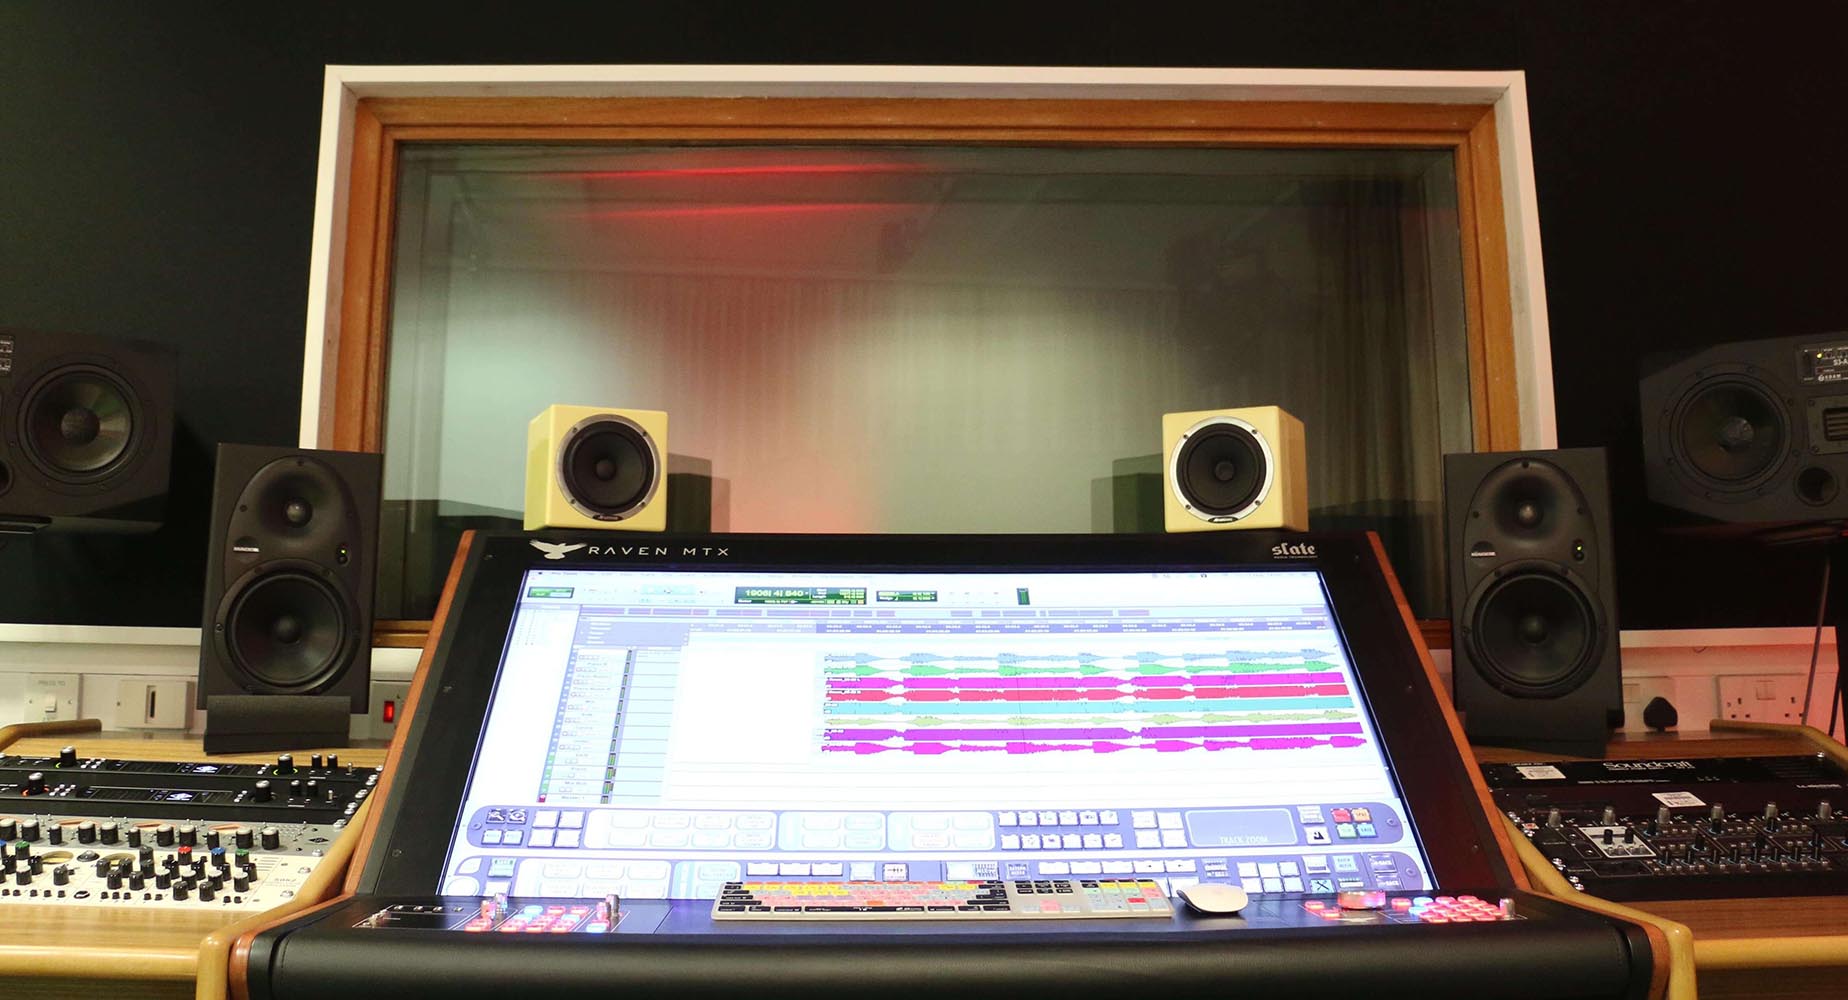 The Suite, Audio and Video Recording Studio